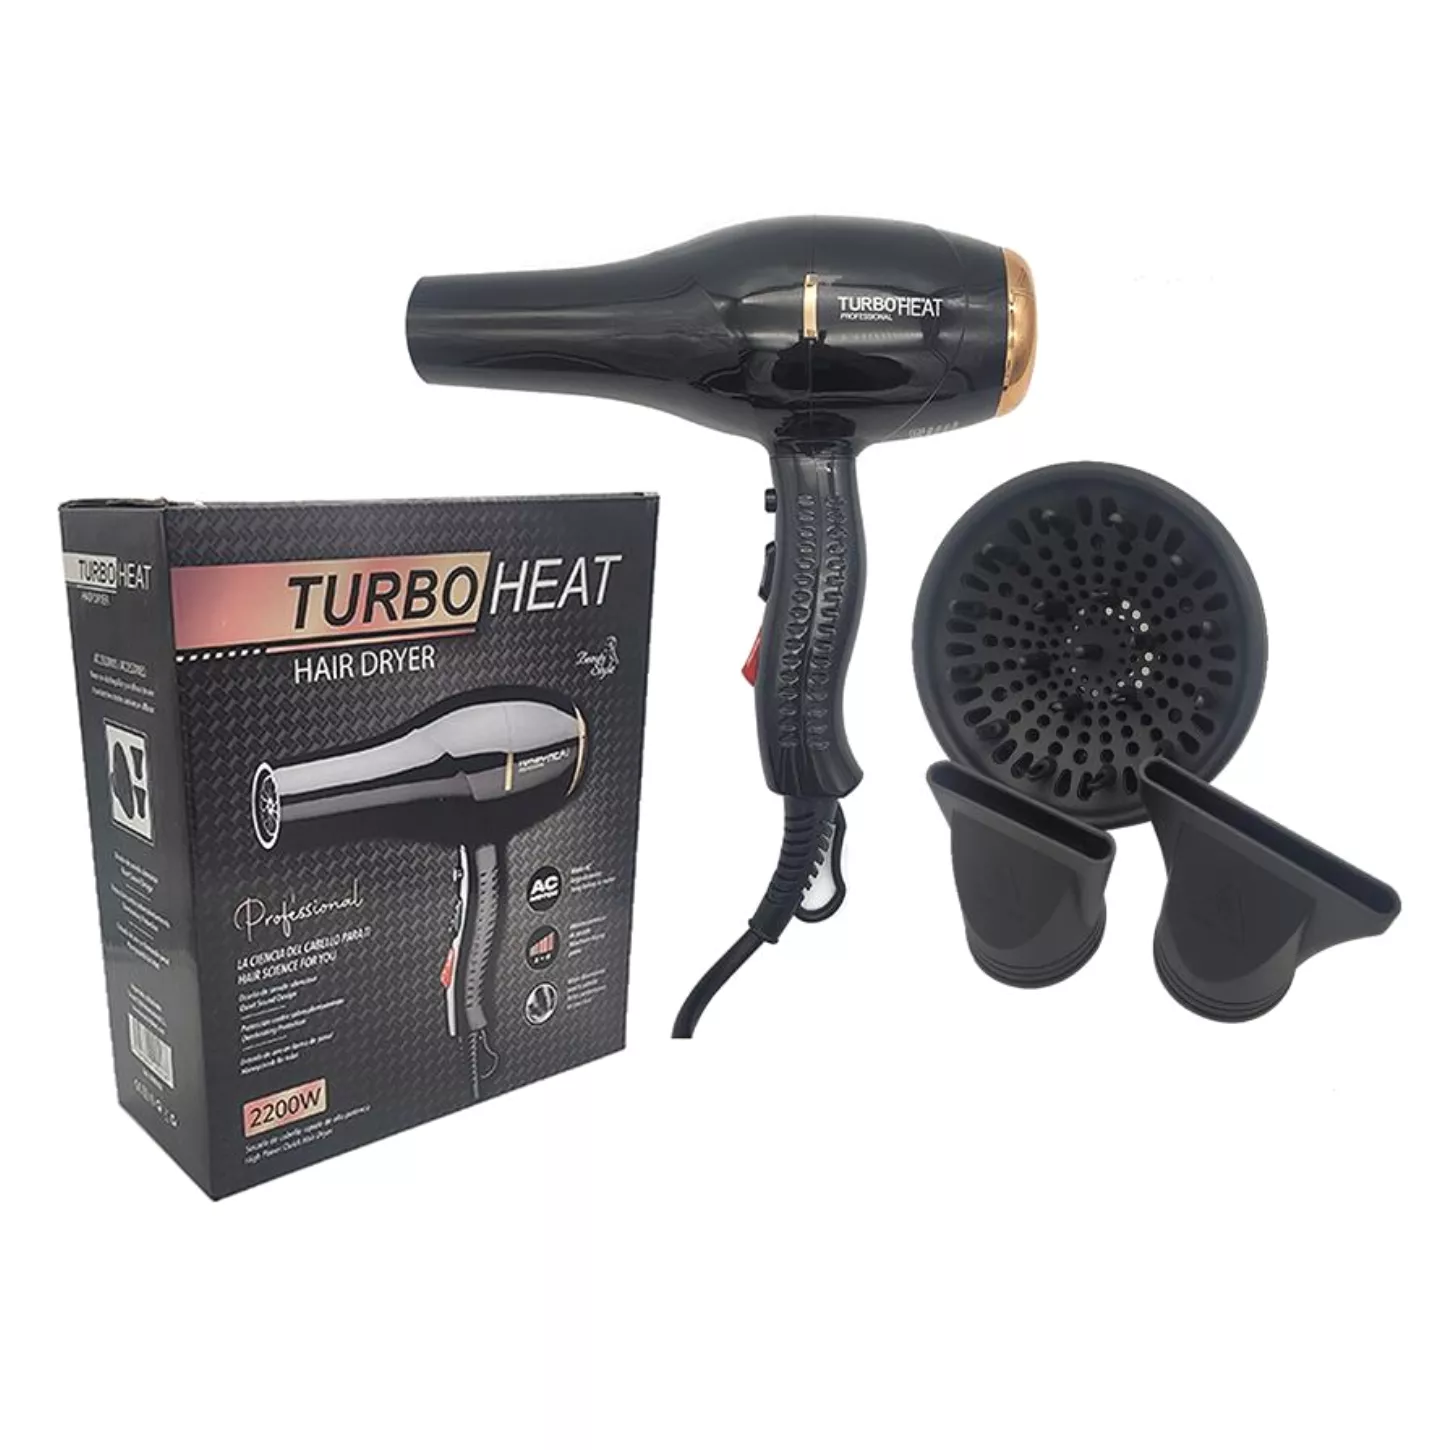 Secador turbo heat hair dryer 2200w